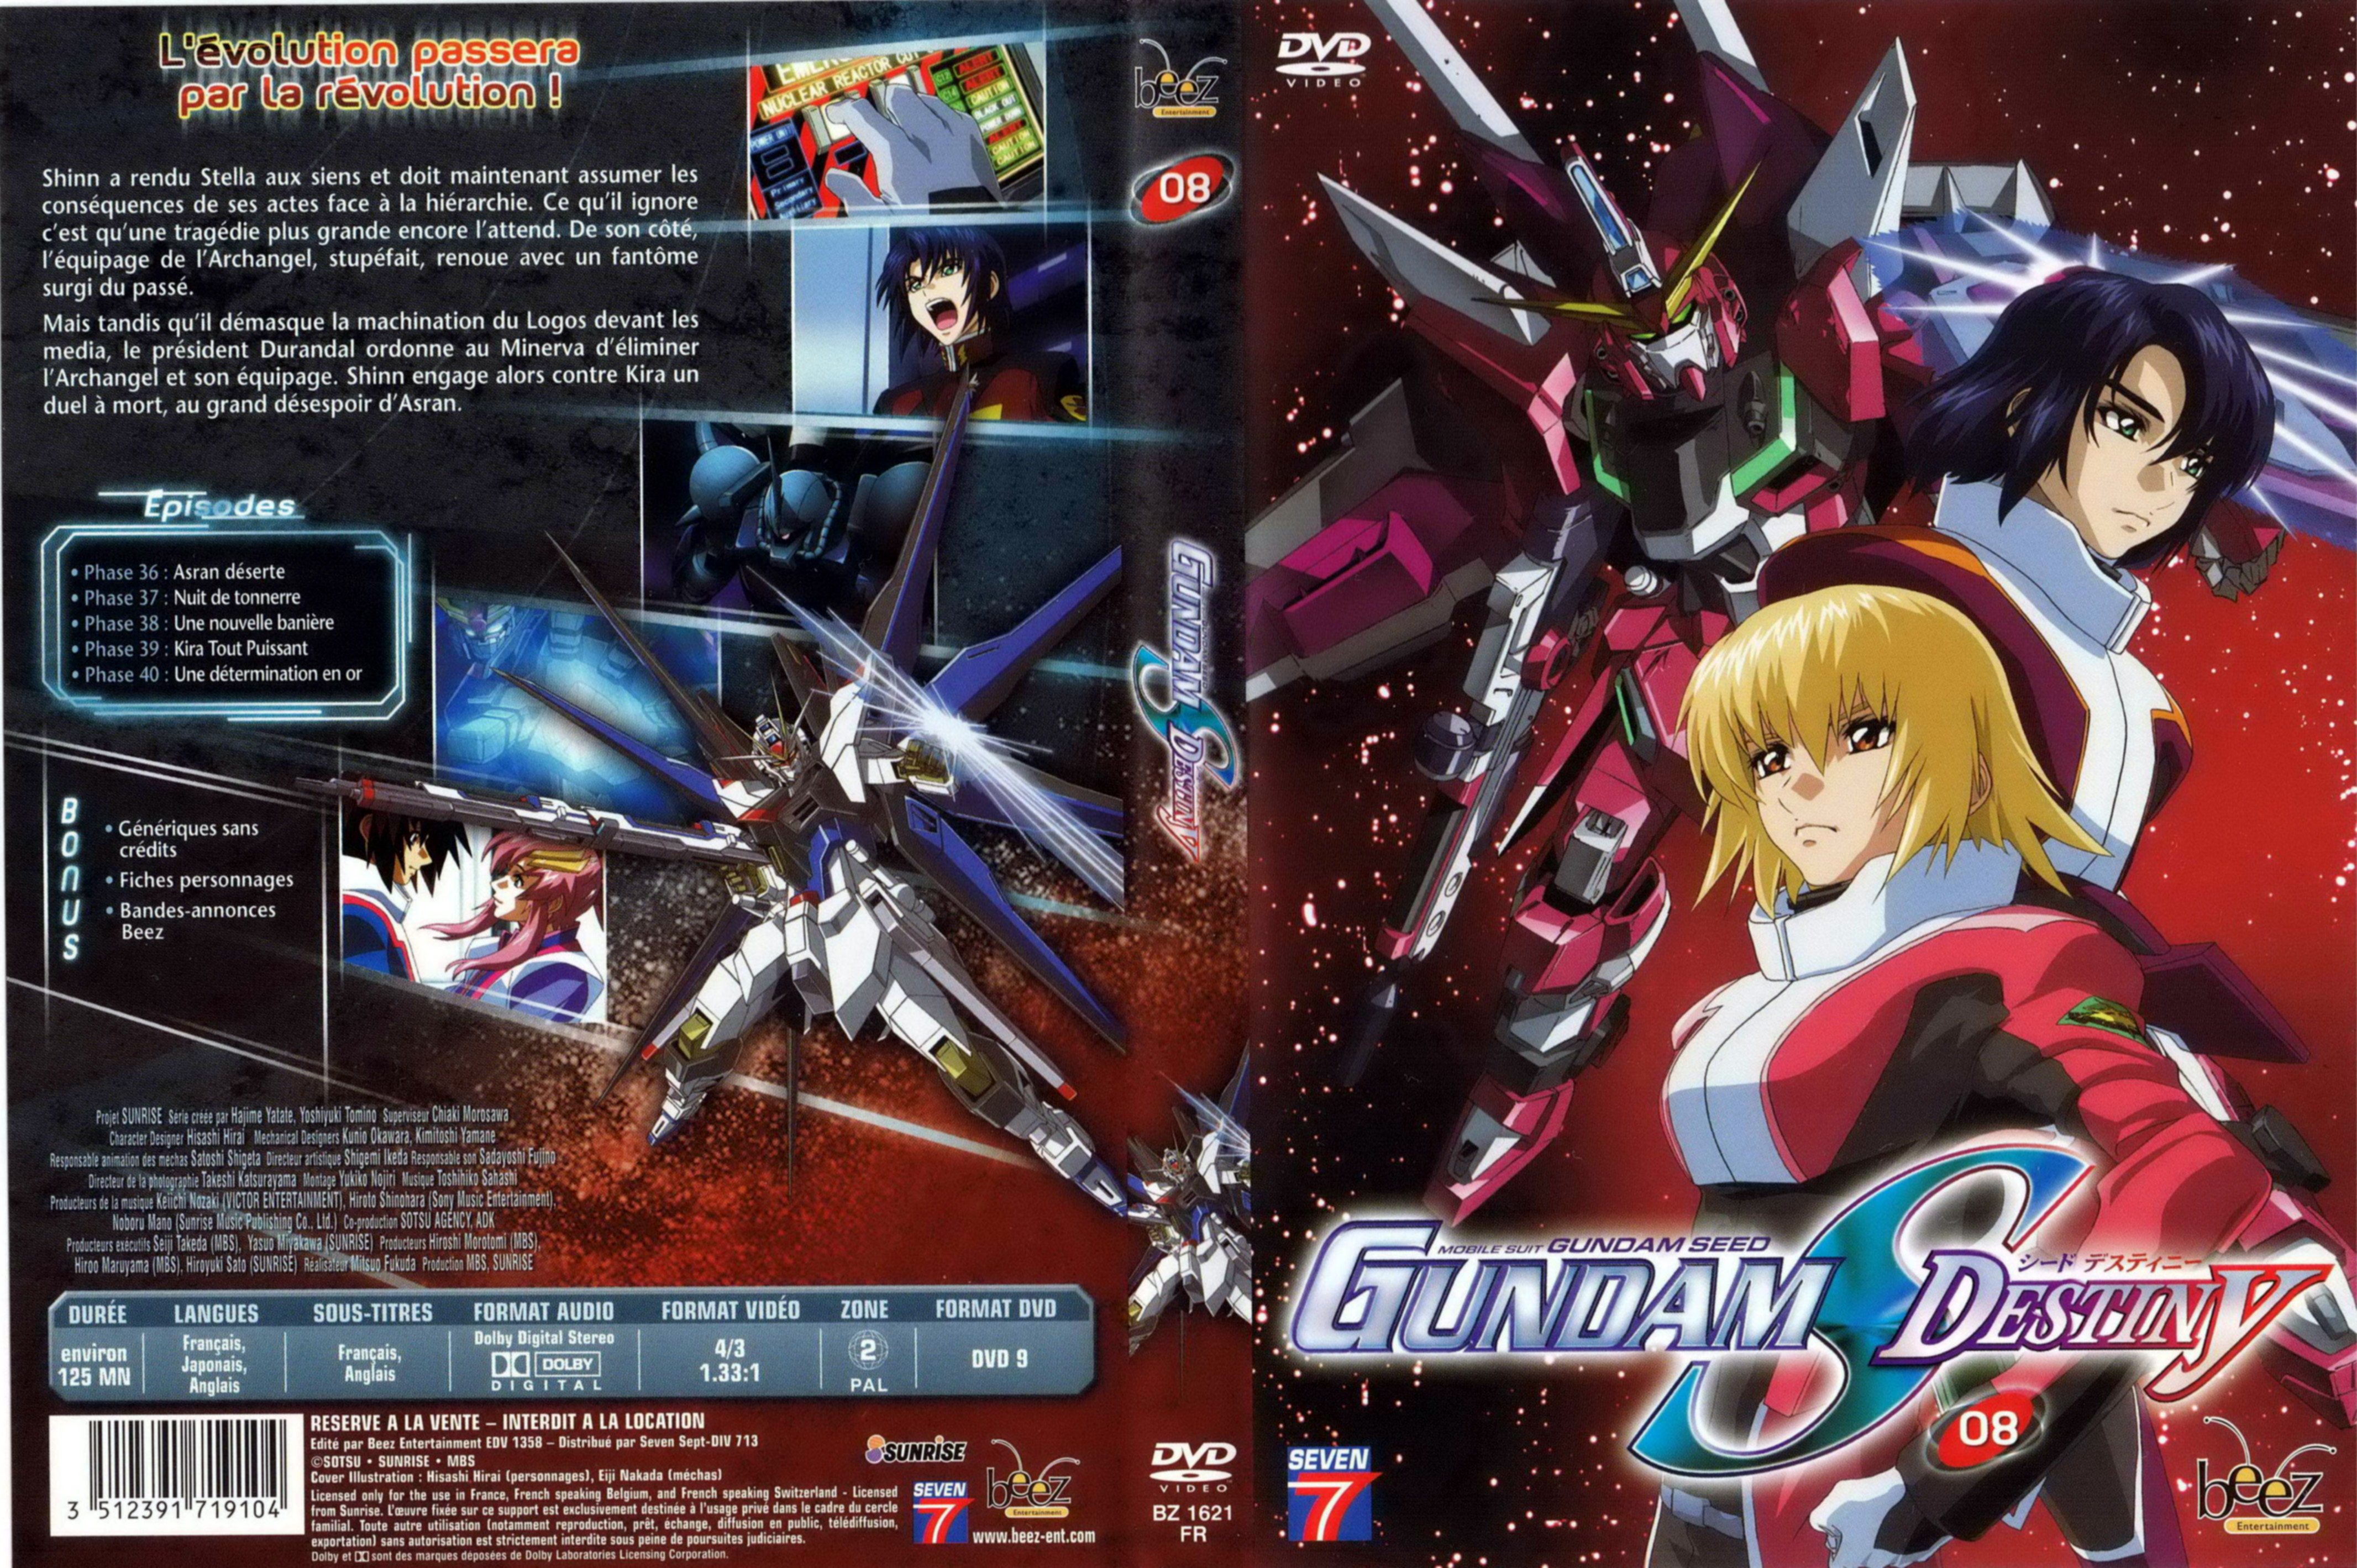 Jaquette DVD Gundam destiny vol 08